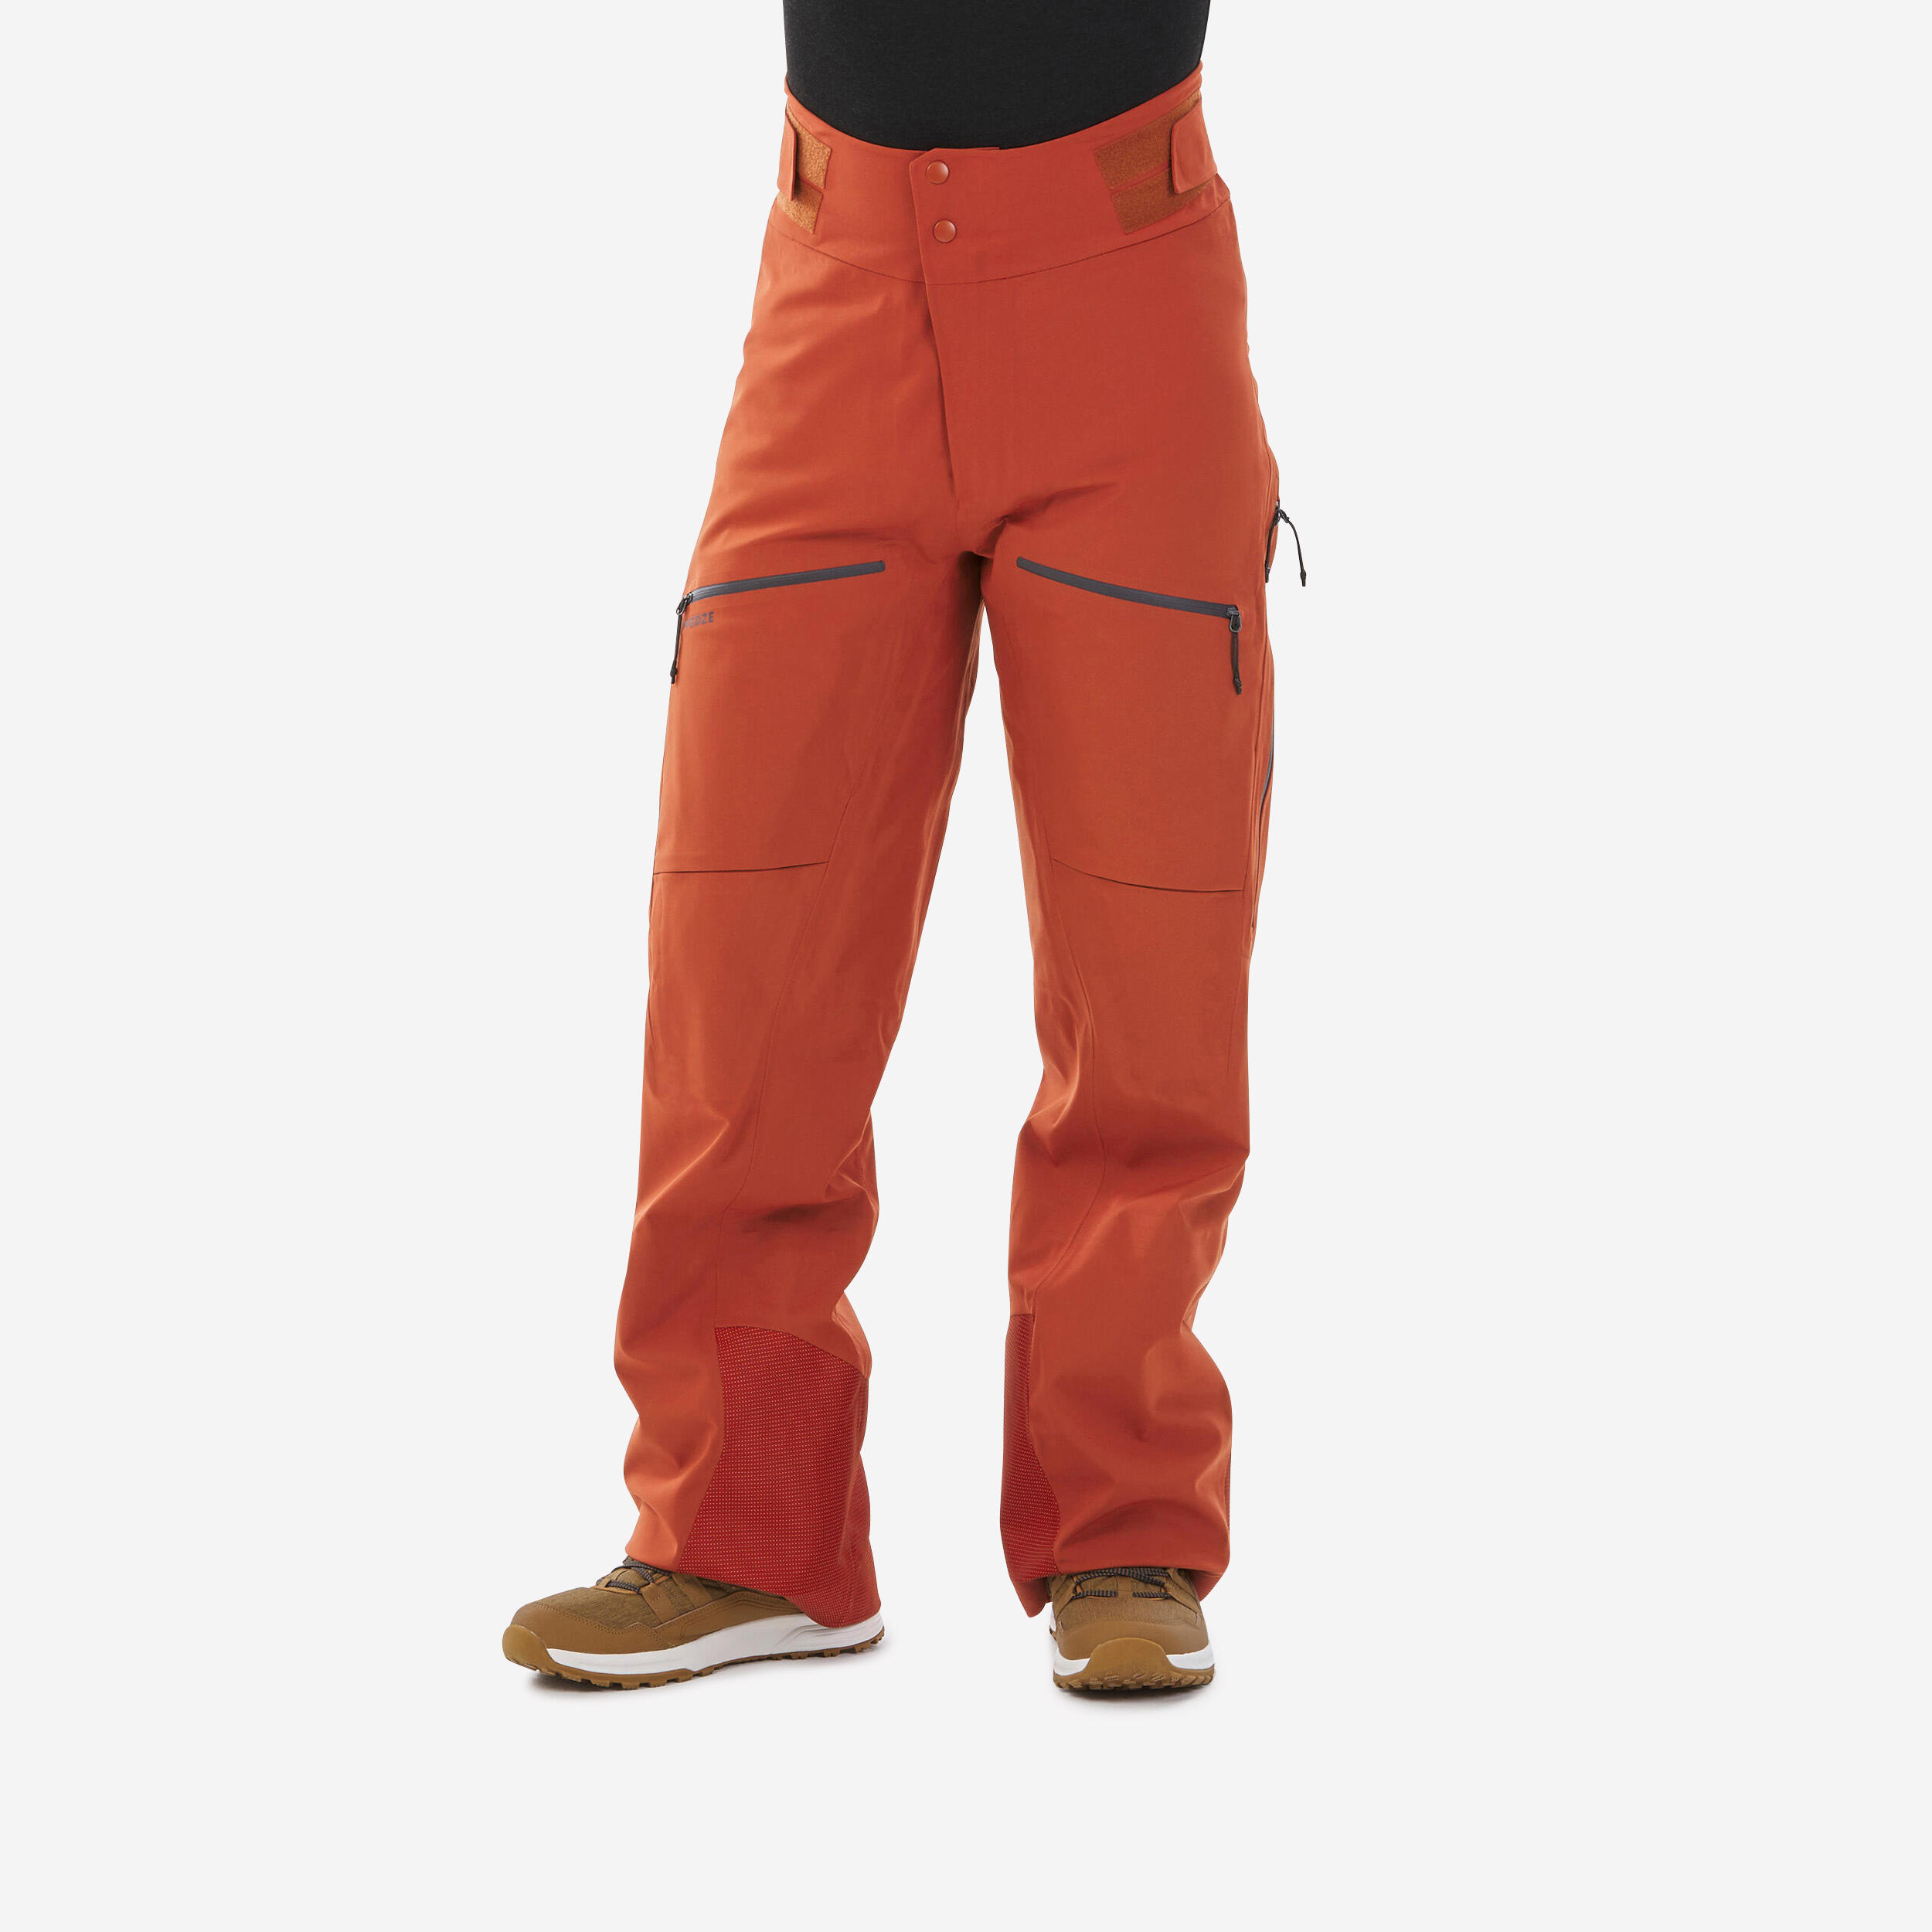 Men's Winter Pants - FR 500 Orange - Dark sepia - Wedze - Decathlon